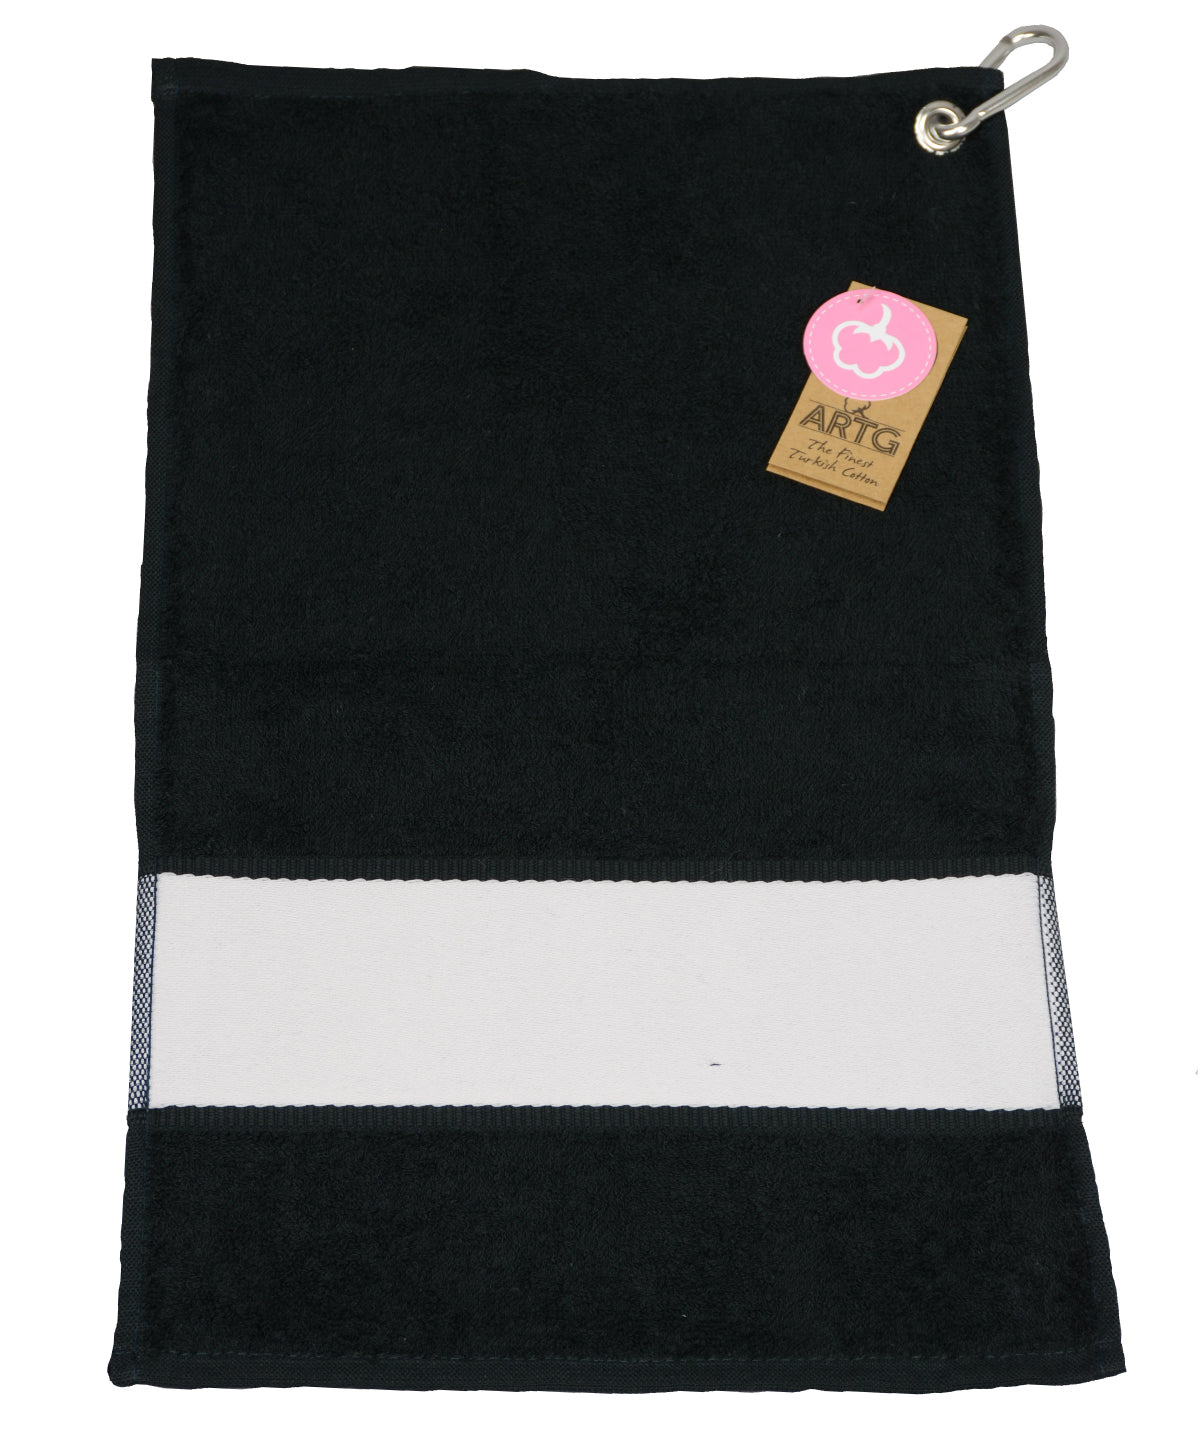 Personalised Towels - Black A&R Towels ARTG® SUBLI-Me® golf towel